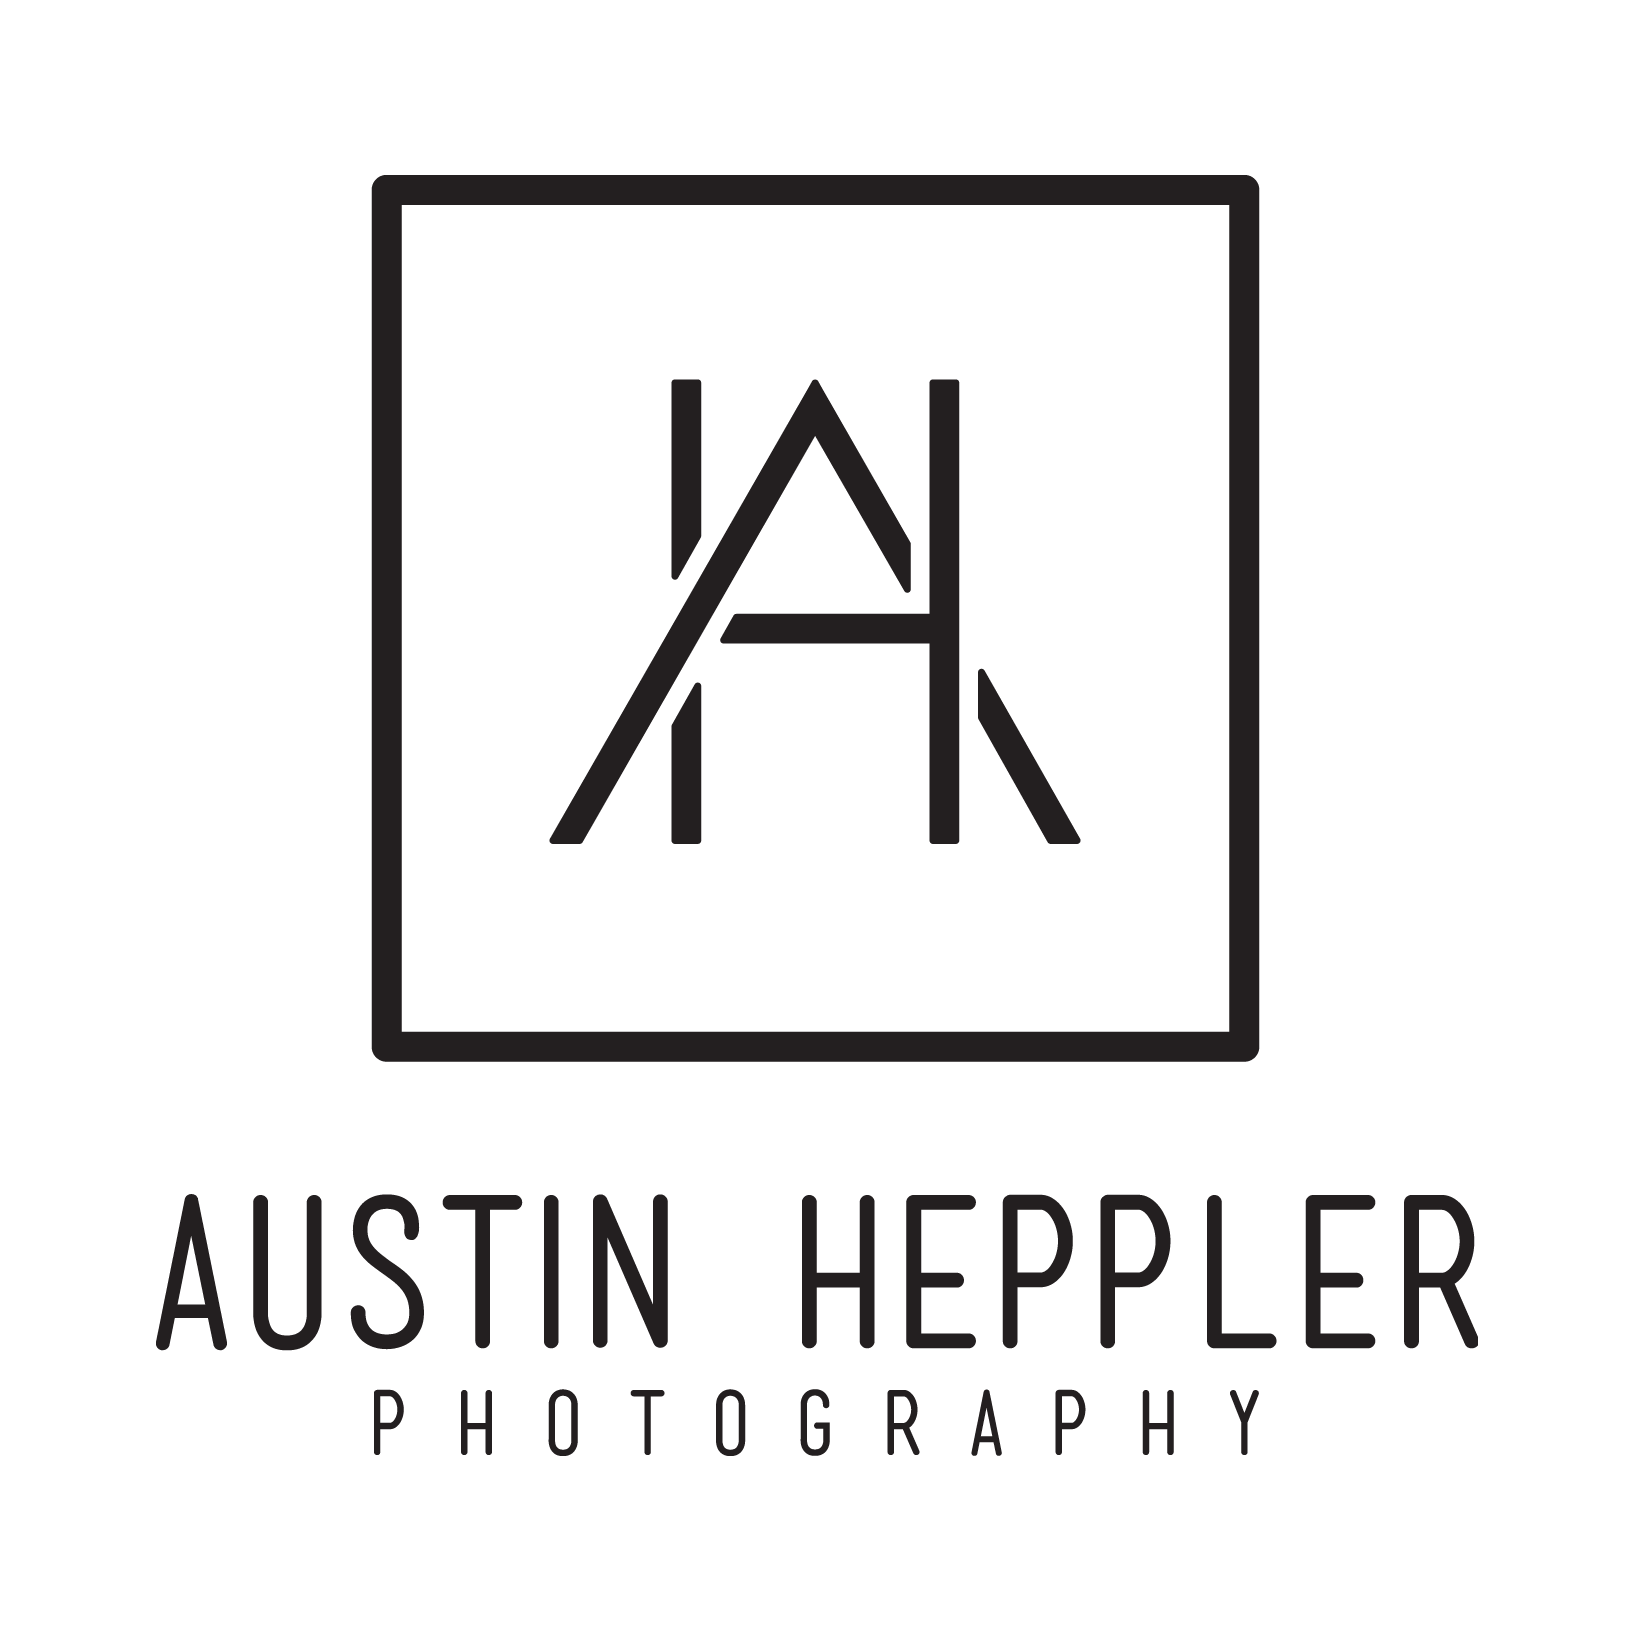 Austin Heppler Photography